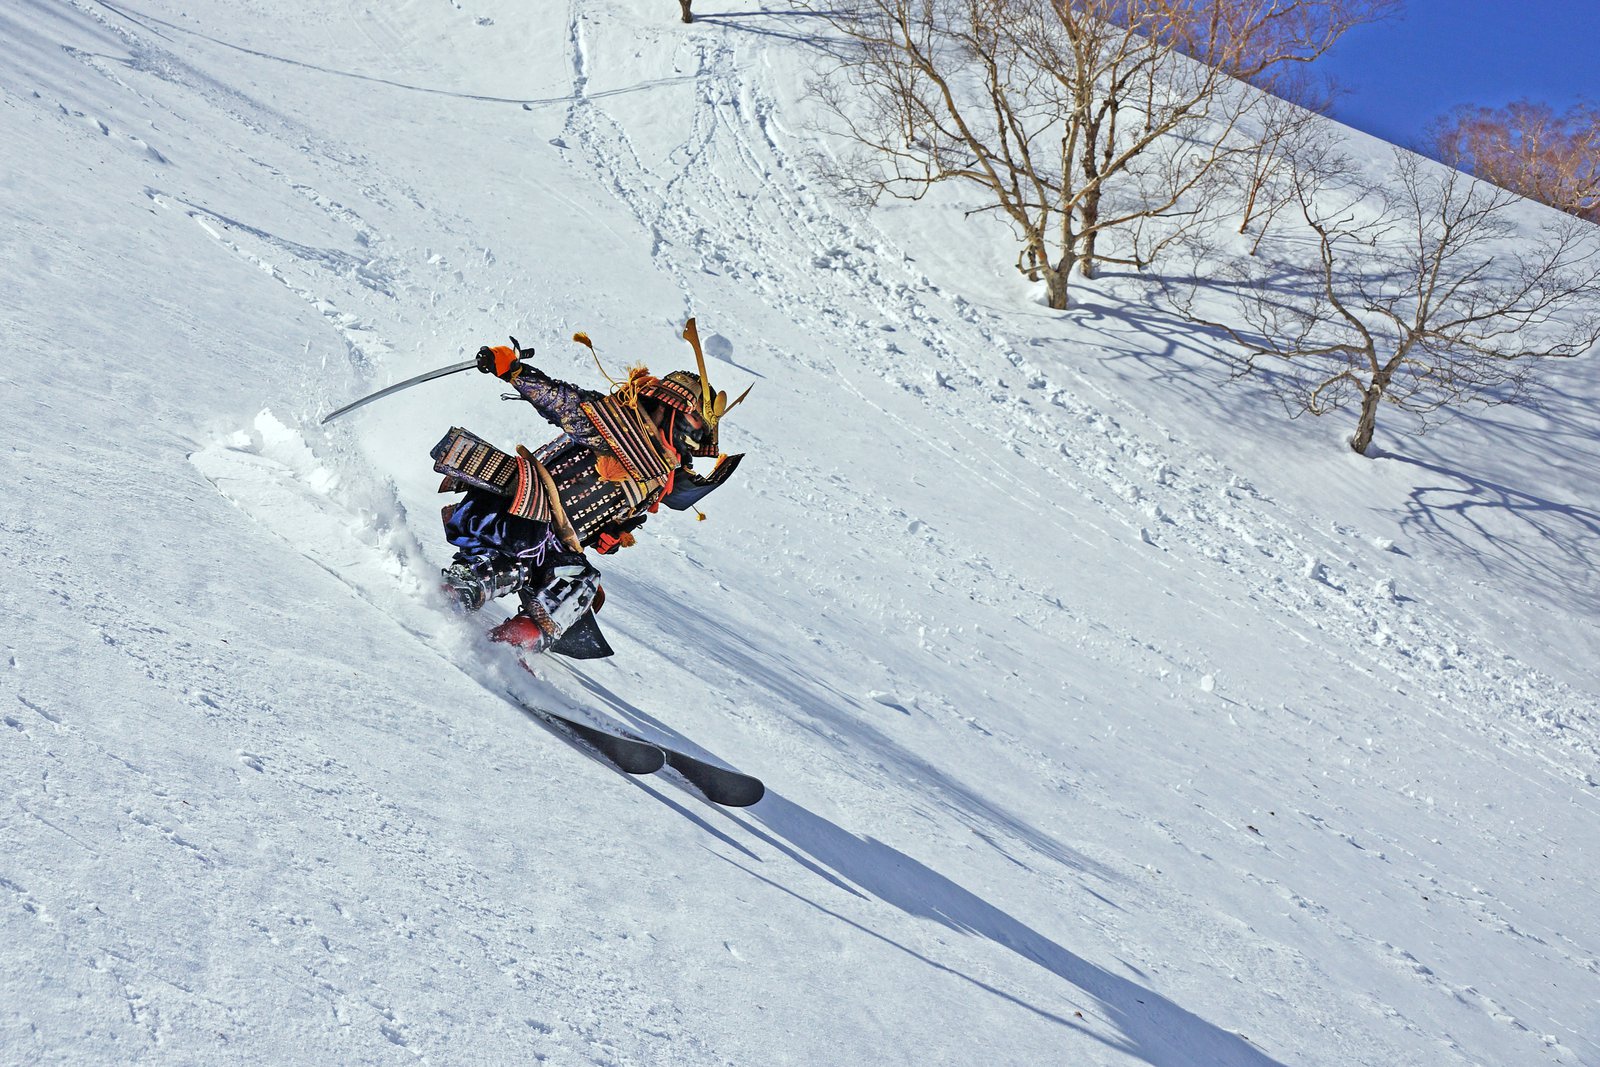 Samurai skiing